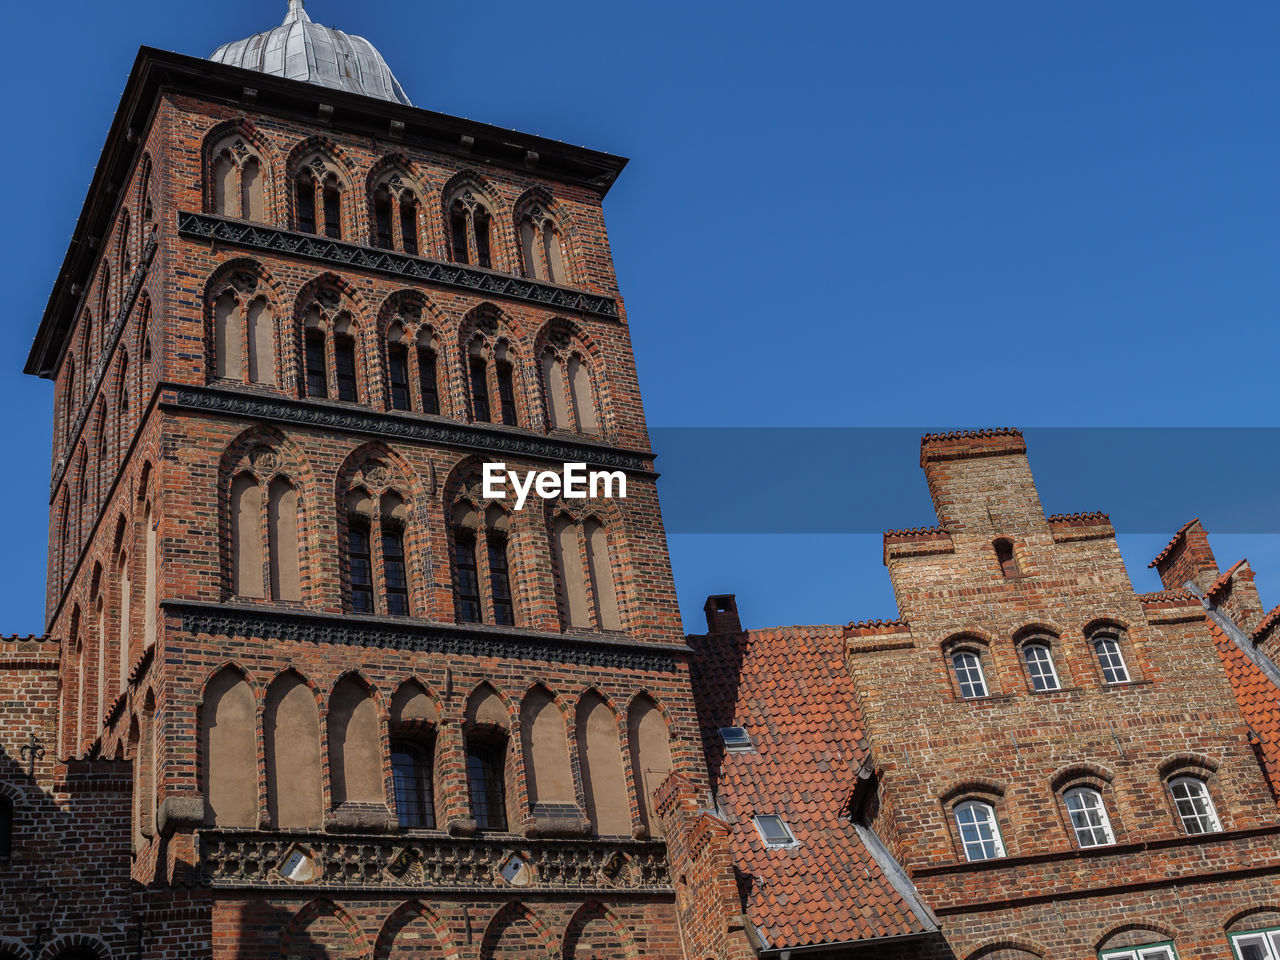 Lübeck city in germany